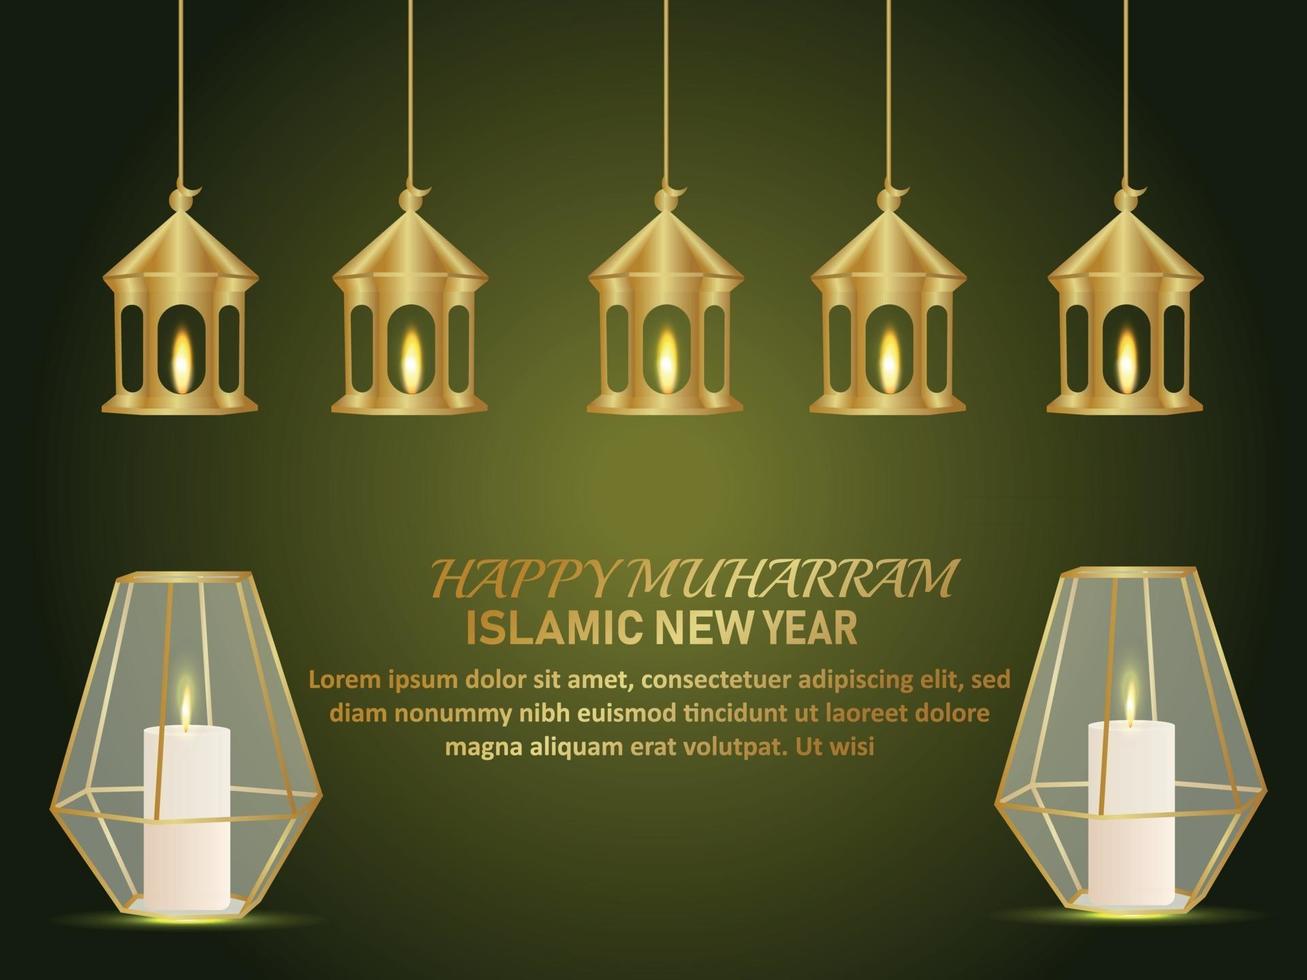 Happy muharram invitation vector illustration with islamic fetival background